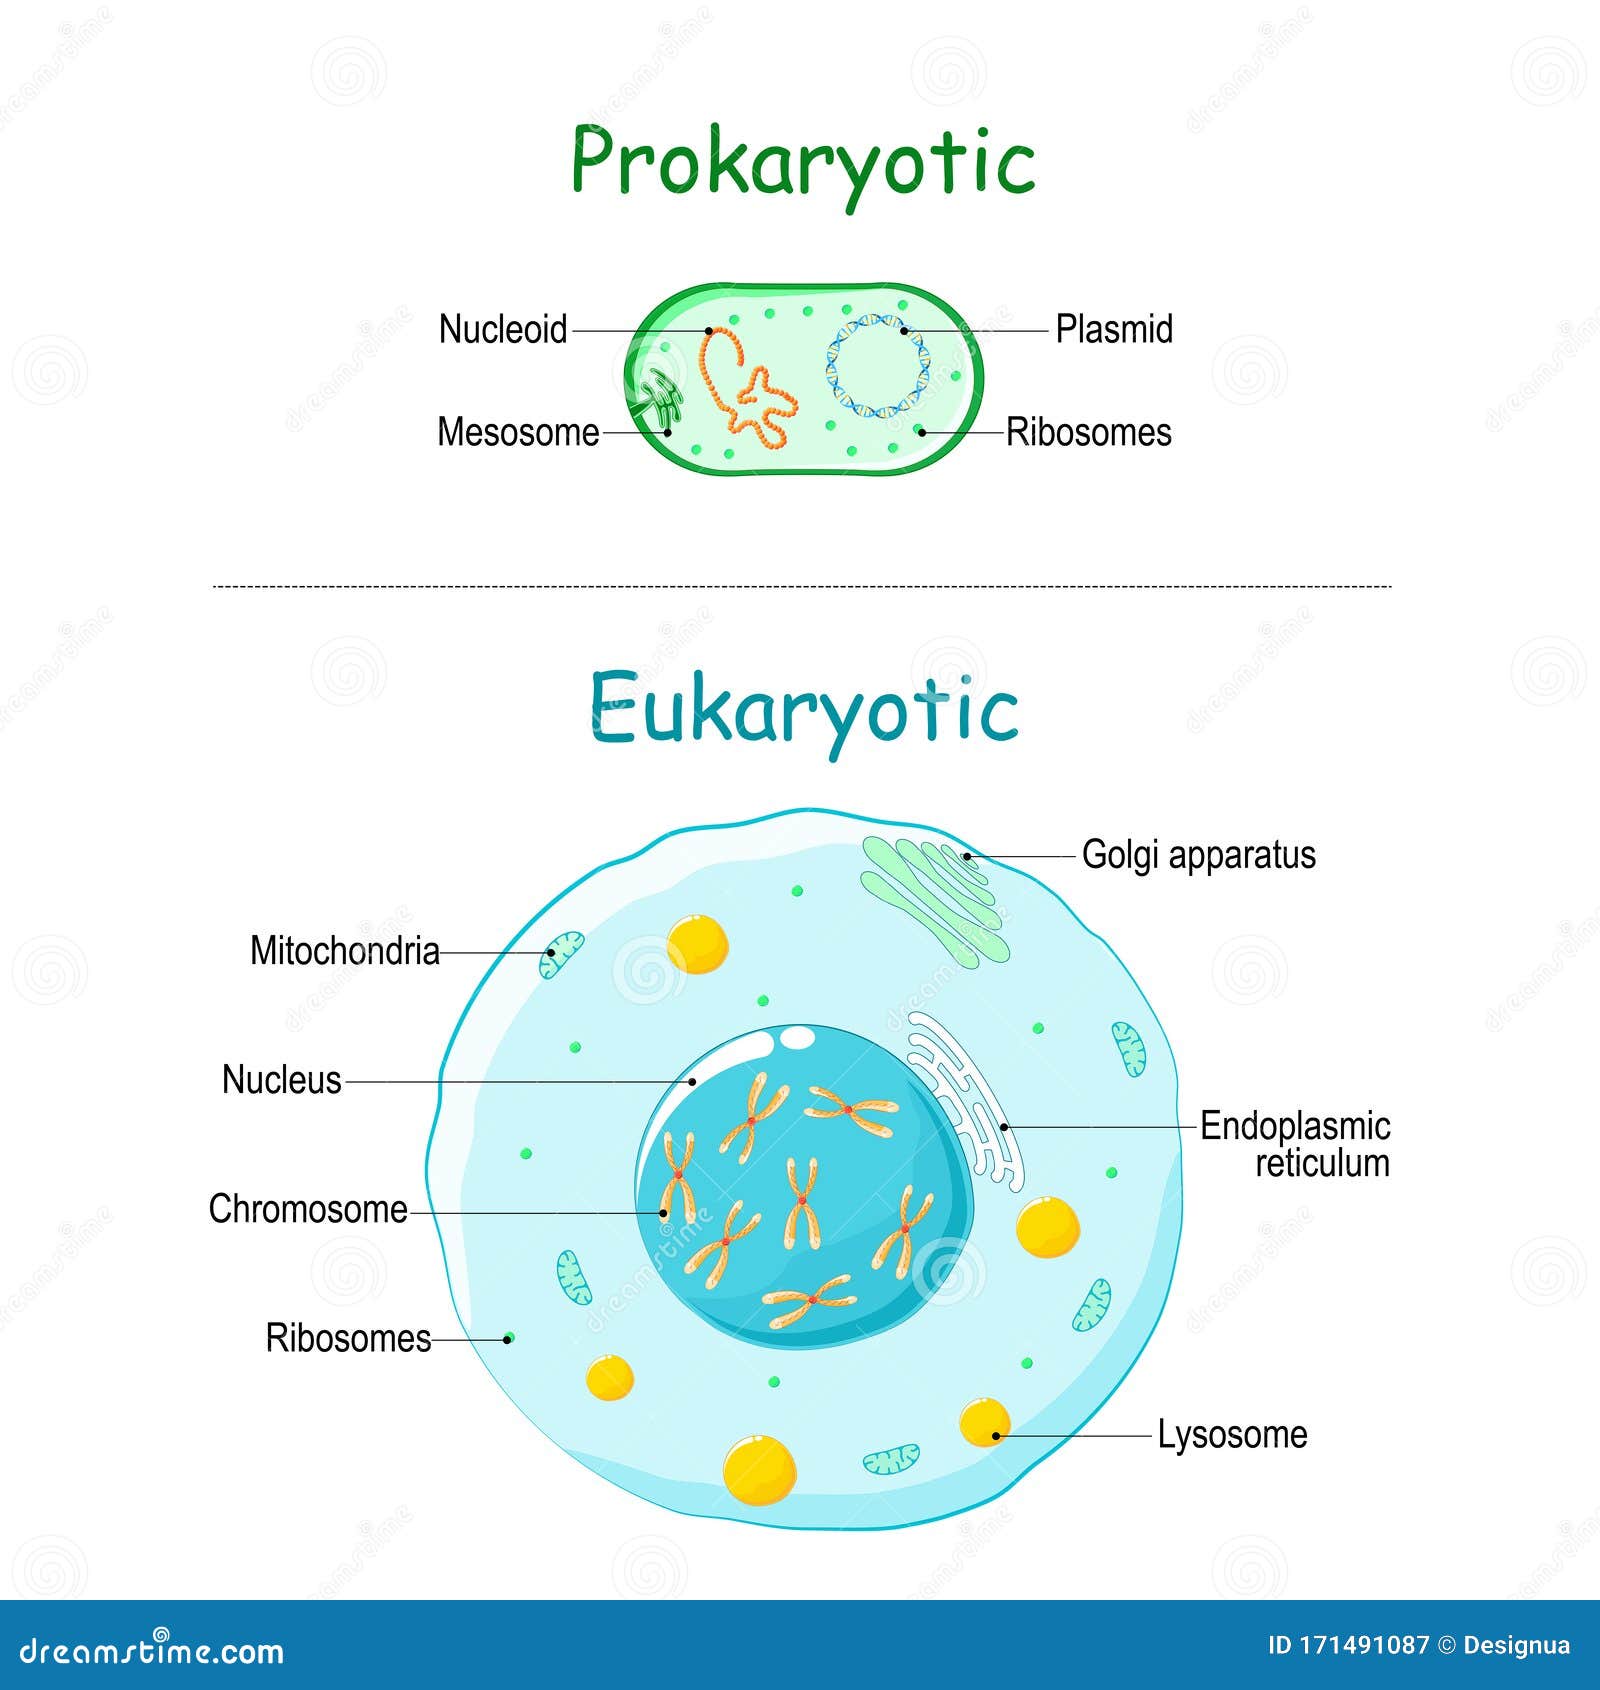 simple prokaryotic cell diagram